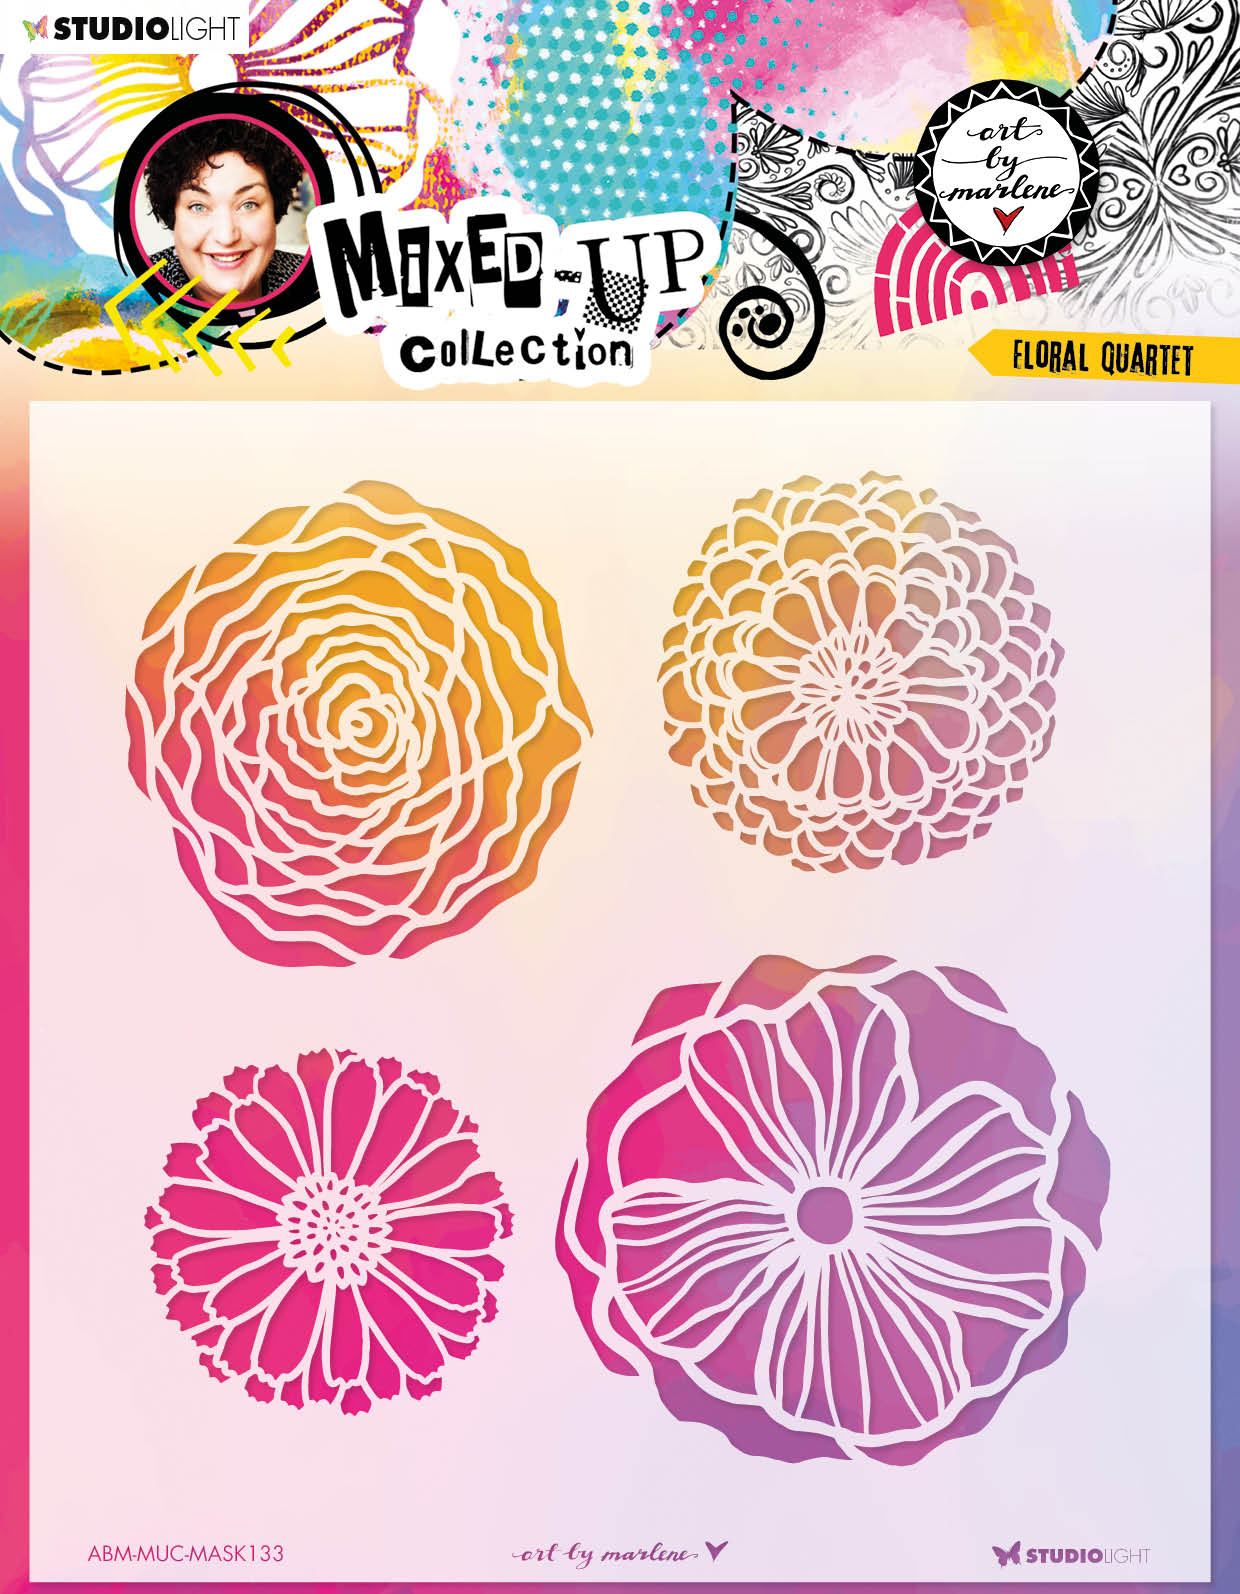 ABM Mask Floral Quartet Mixed-Up Collection 200x200x1mm 1 PC nr.133